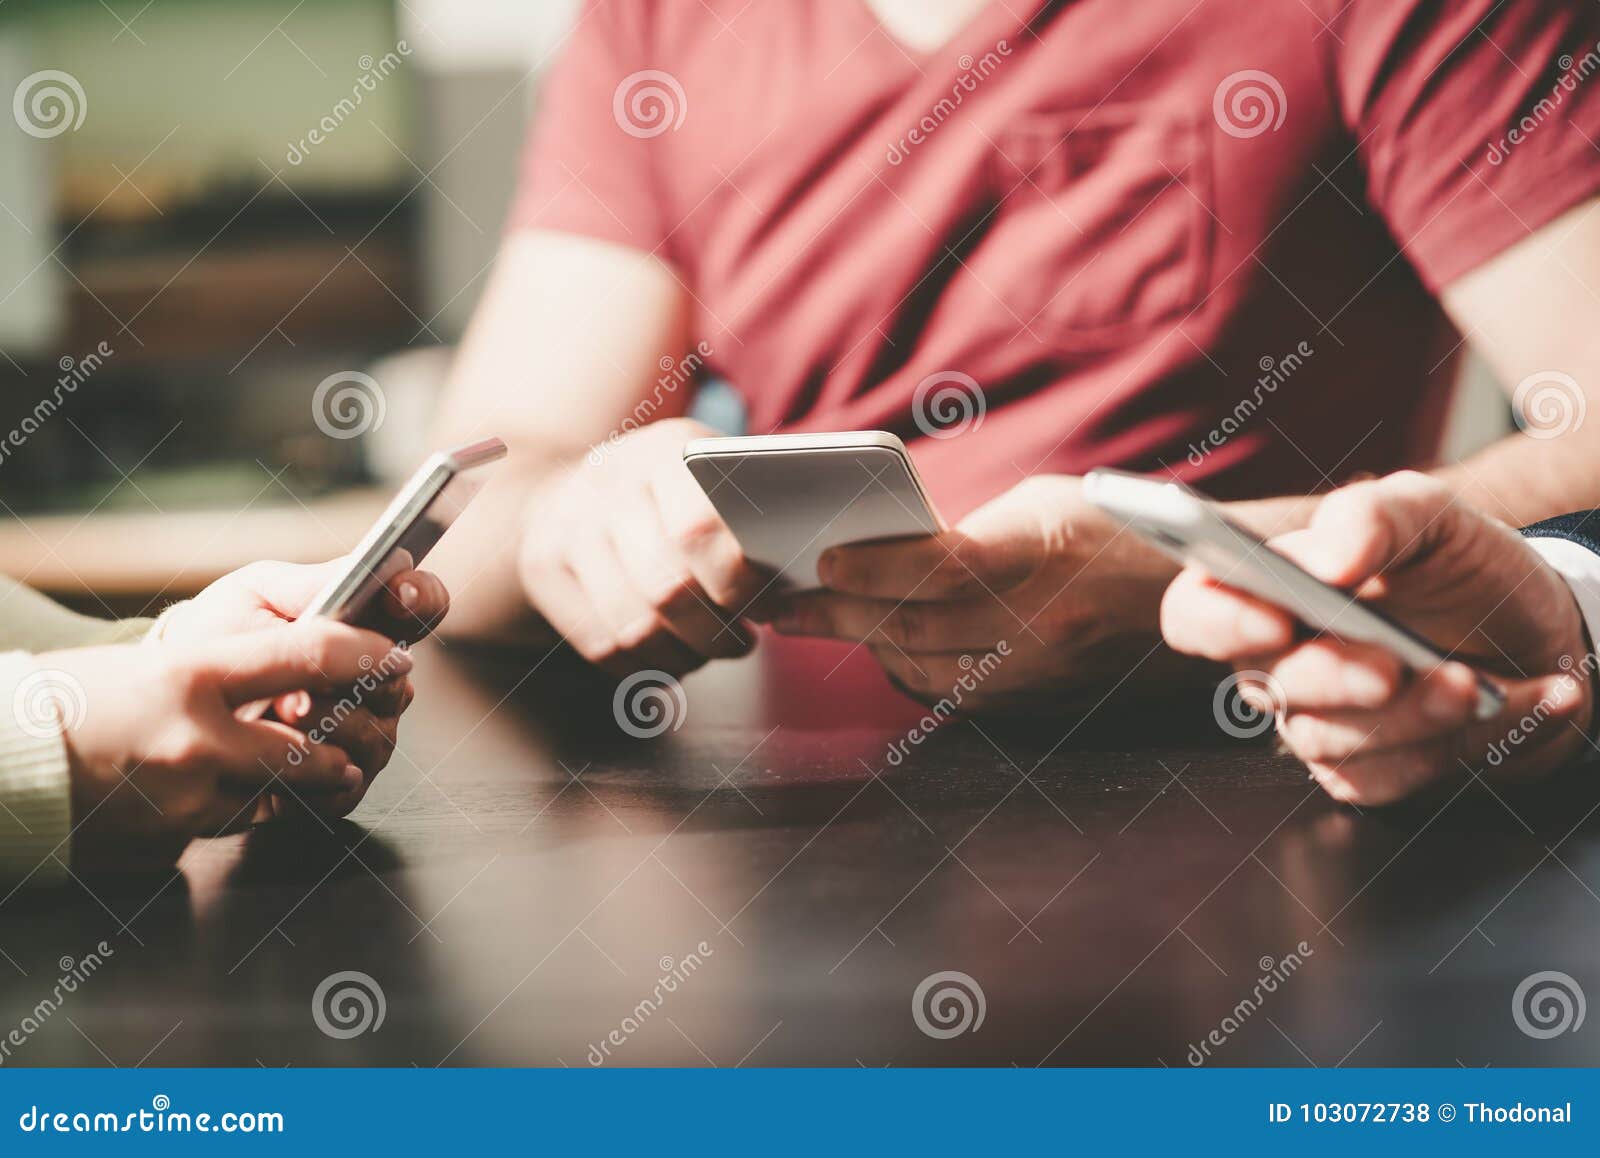 people hands using mobile phones